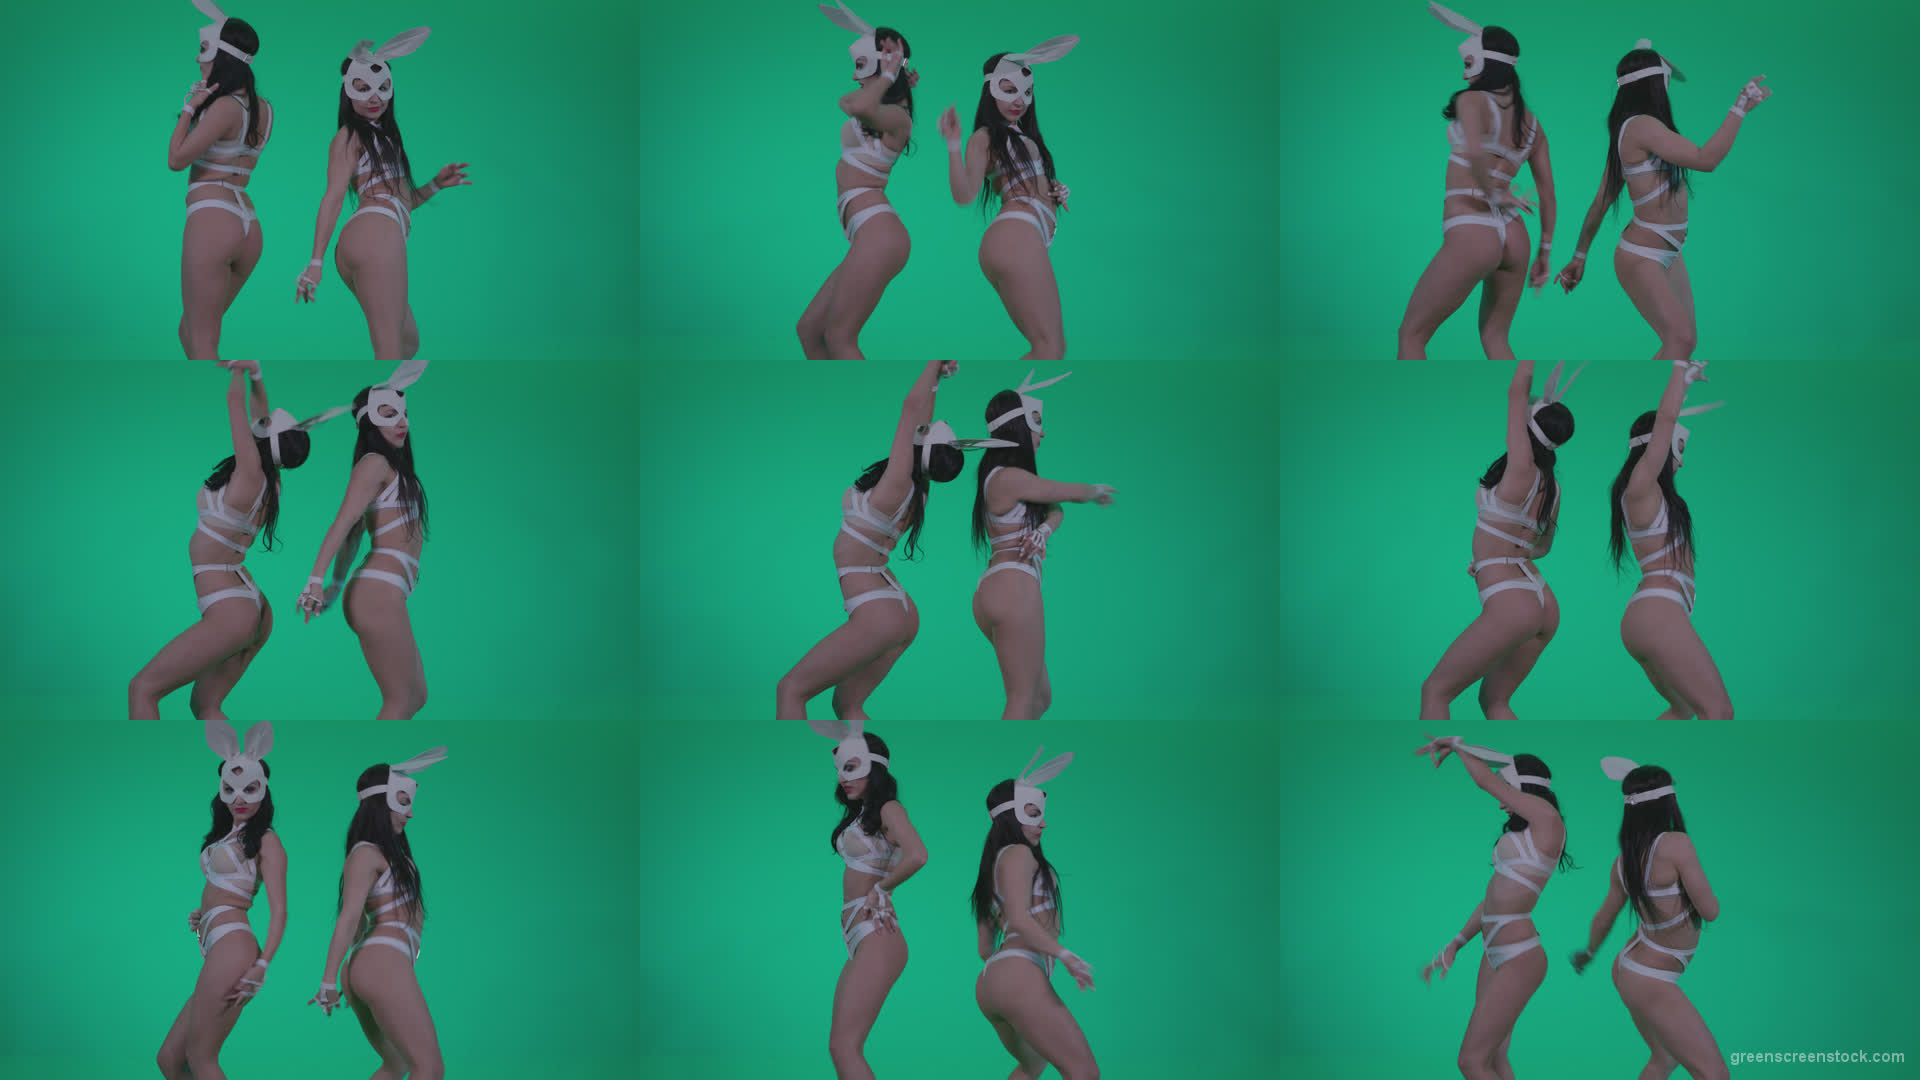 Go-go-Dancer-White-Rabbit-m6-Green-Screen-Video-Footage Green Screen Stock